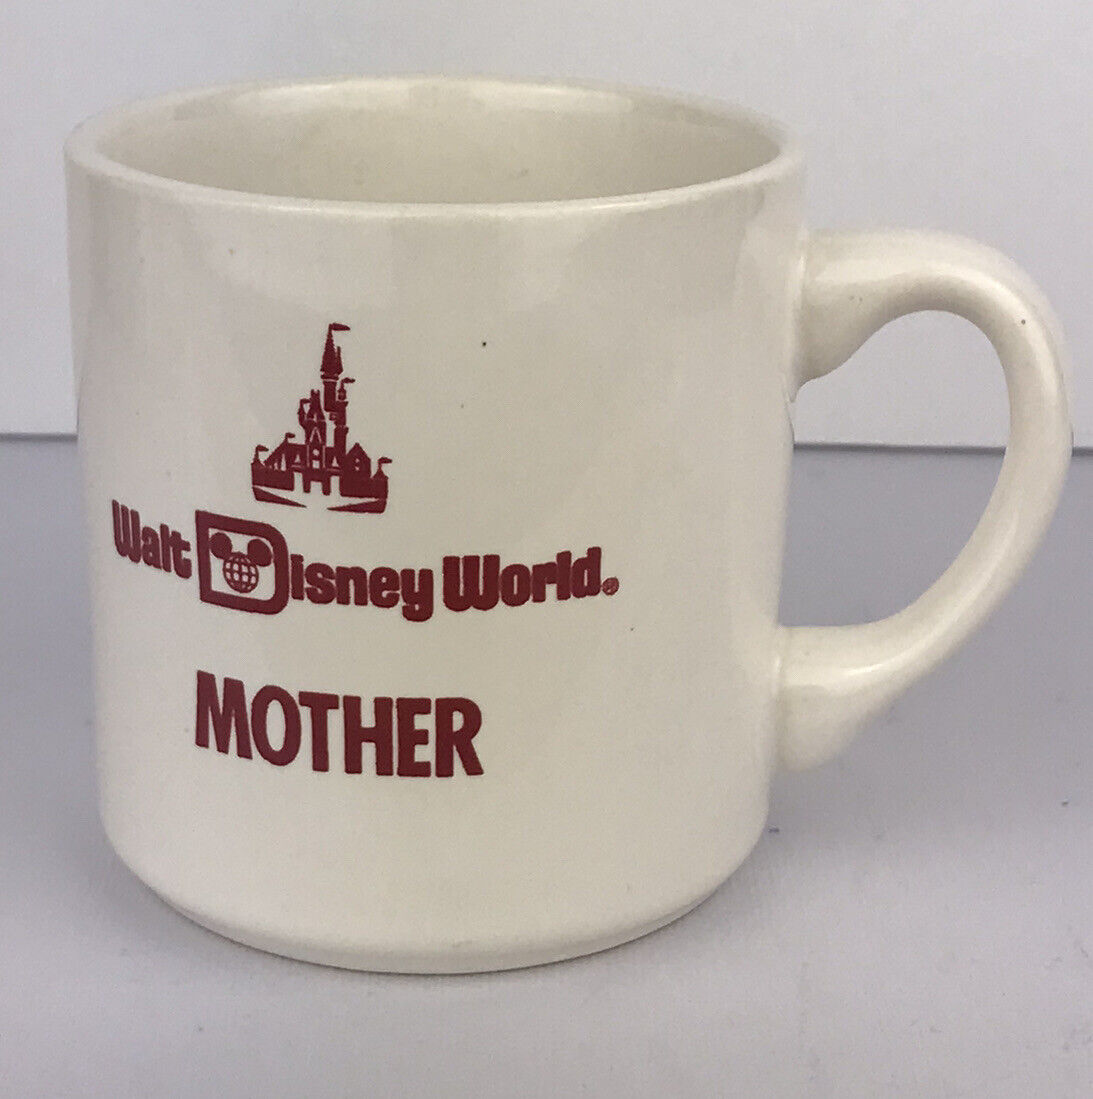 Vintage Walt Disney World Souvenir Mother Coffee Cup Mug White Red Letters